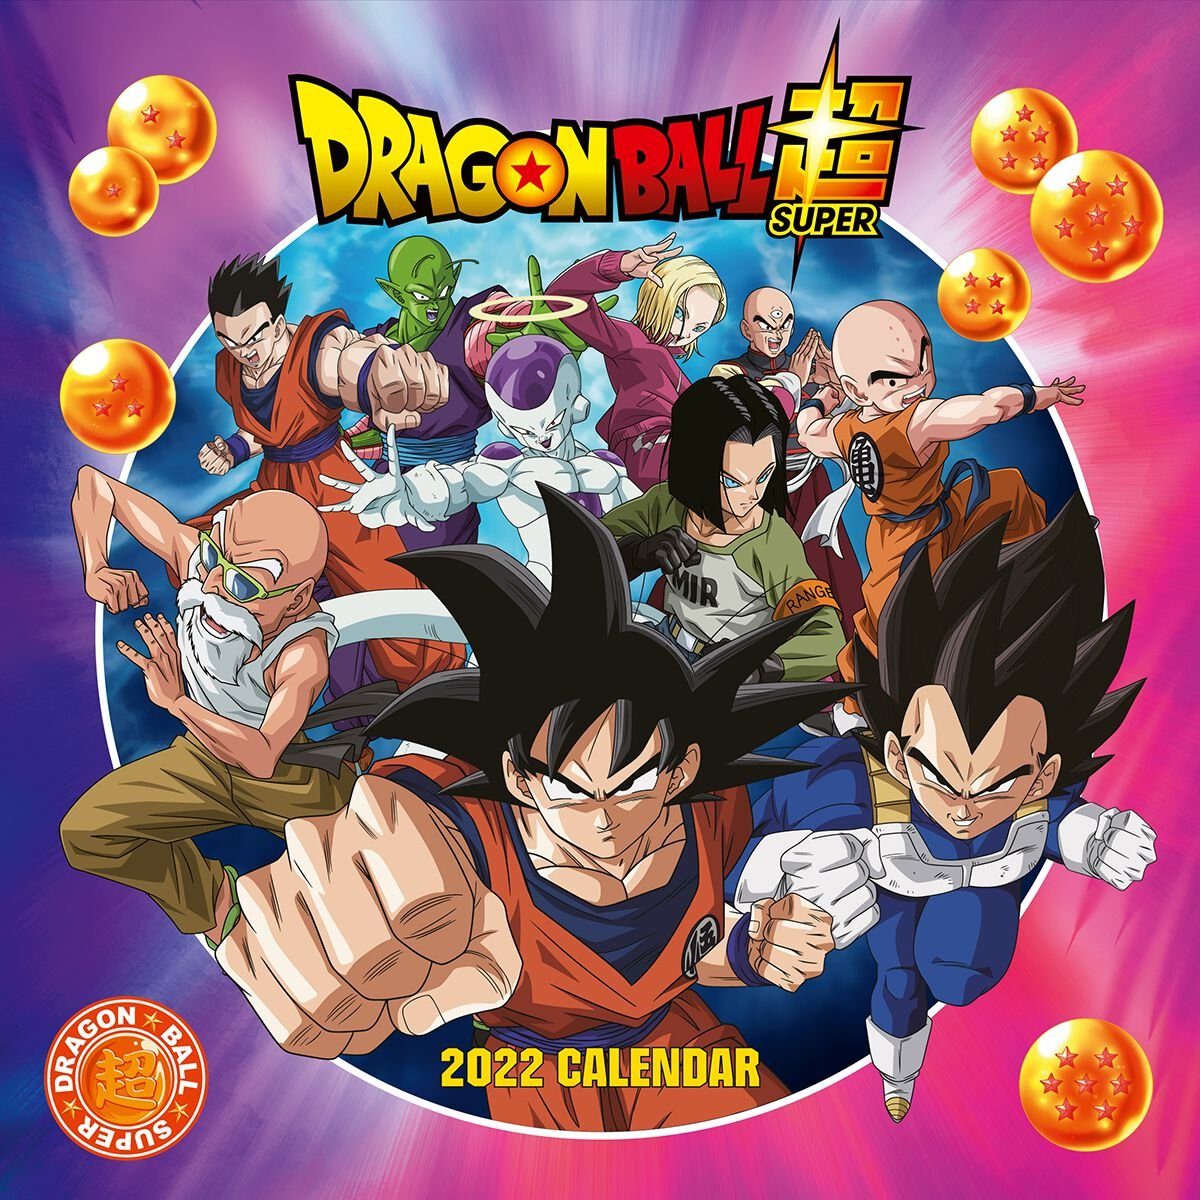 Danilo Monatskalender Dragon Ball Super - 2022 Kalender - ca. 60 cm x 30 cm